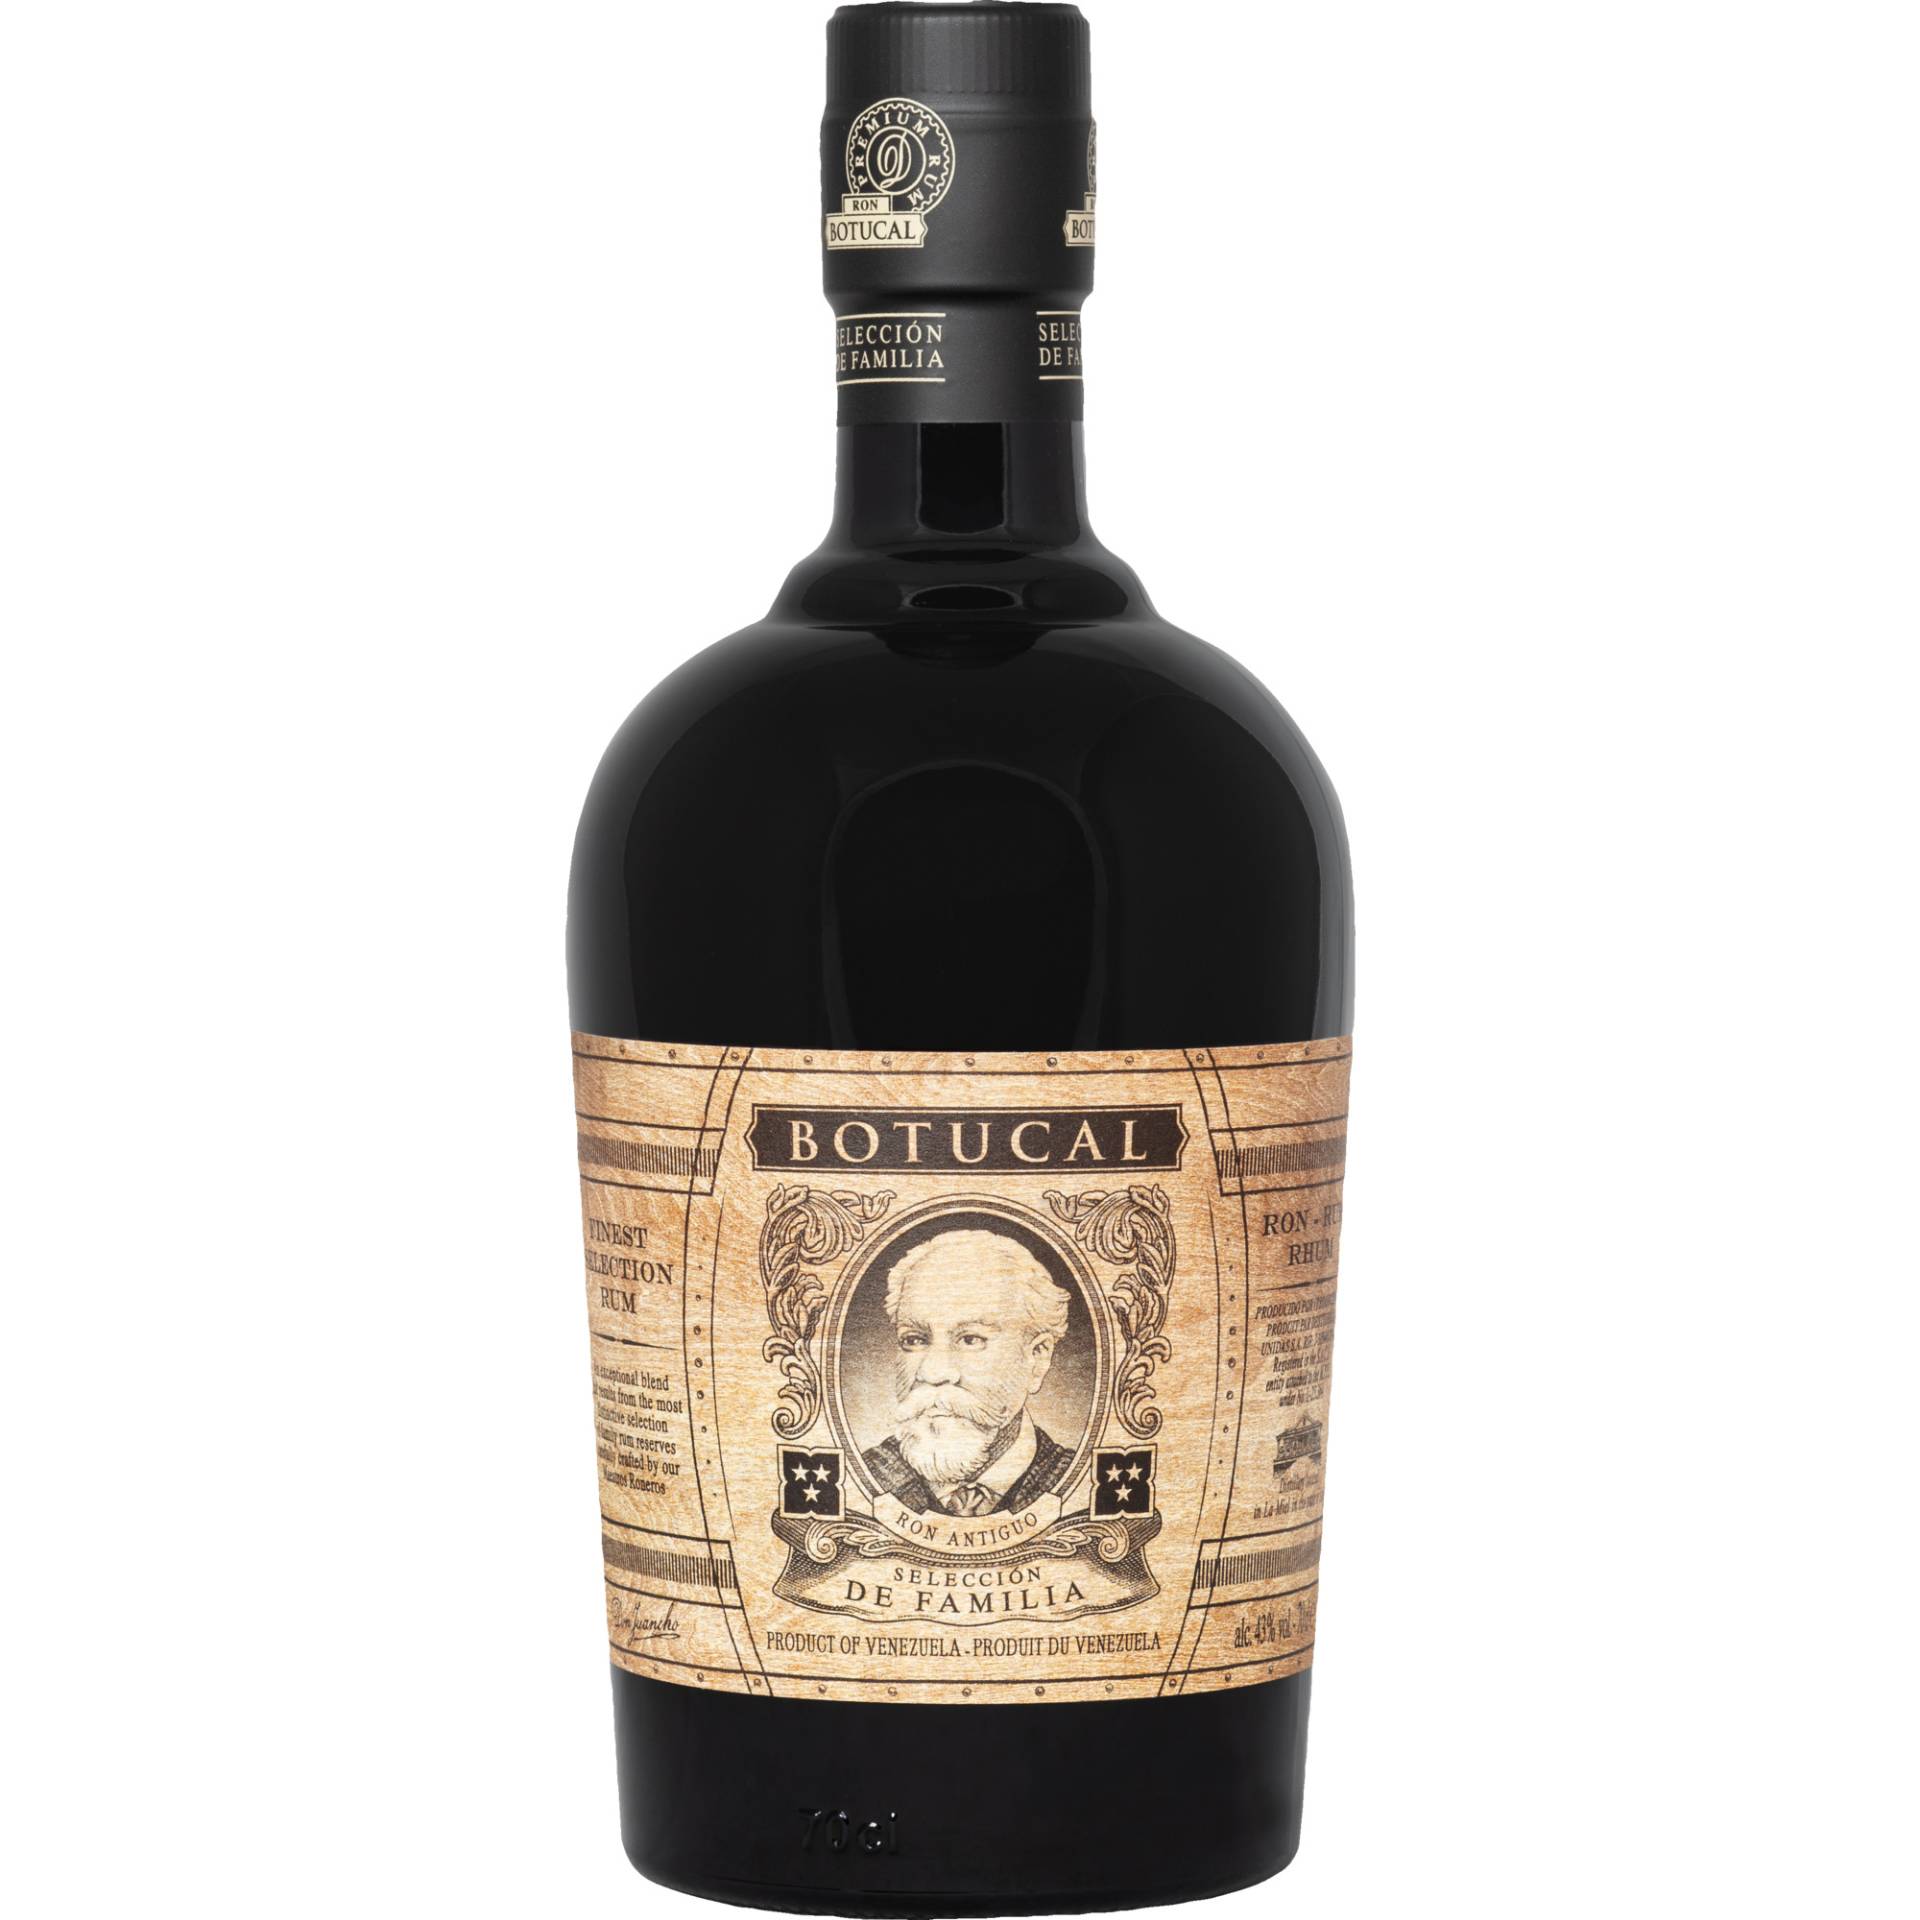 Botucal Rum Selección de Familia, Venezuela, 0,7 L, 43 %Vol., in Geschenkverpackung, Spirituosen von Sierra Madre GmbH, Rohrstr. 26, 56093 Hagen, Germany